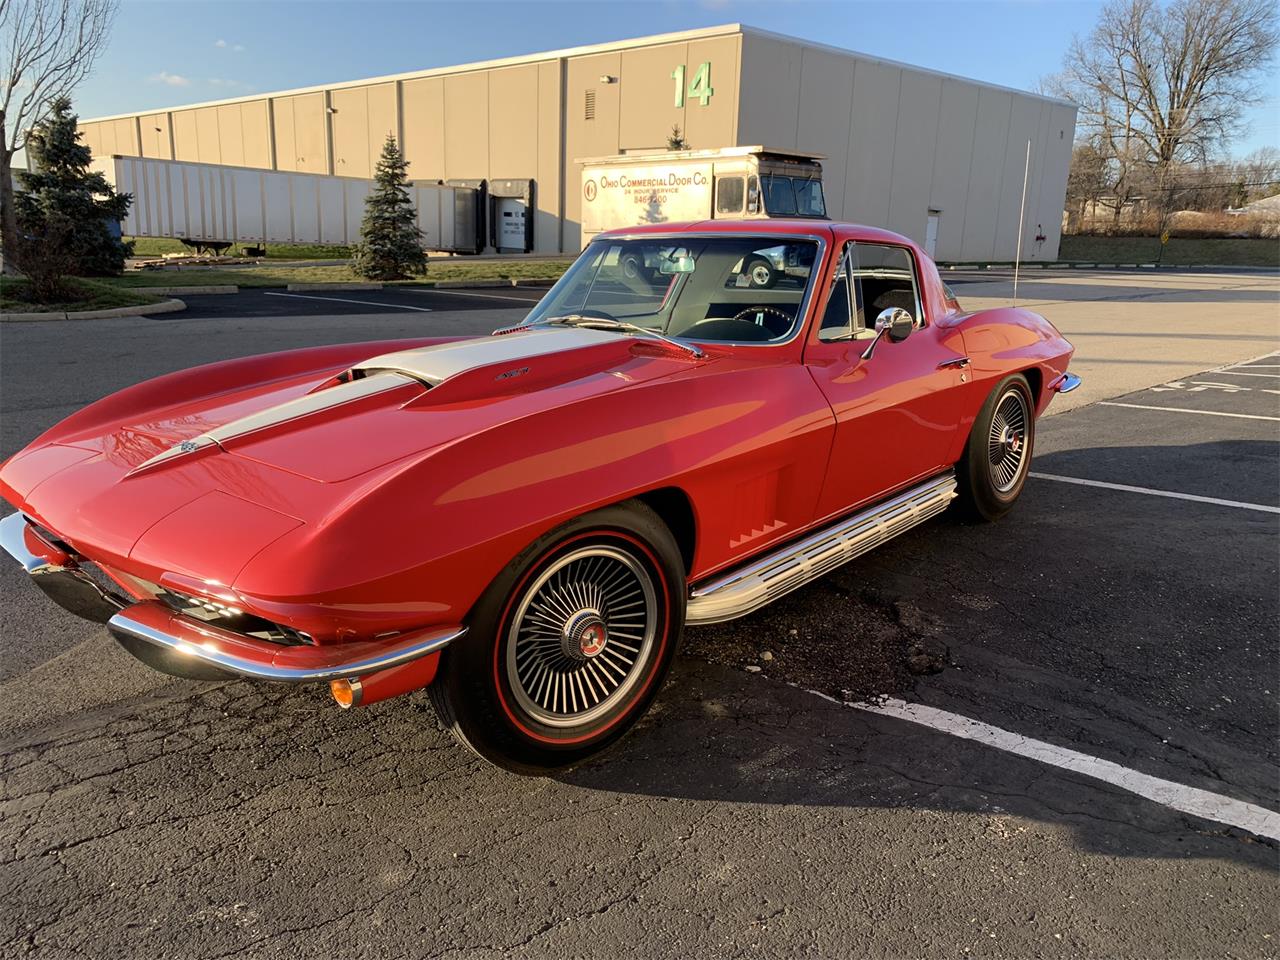 For Sale: 1967 Chevrolet Corvette in Columbus , Ohio for sale in Columbus, OH